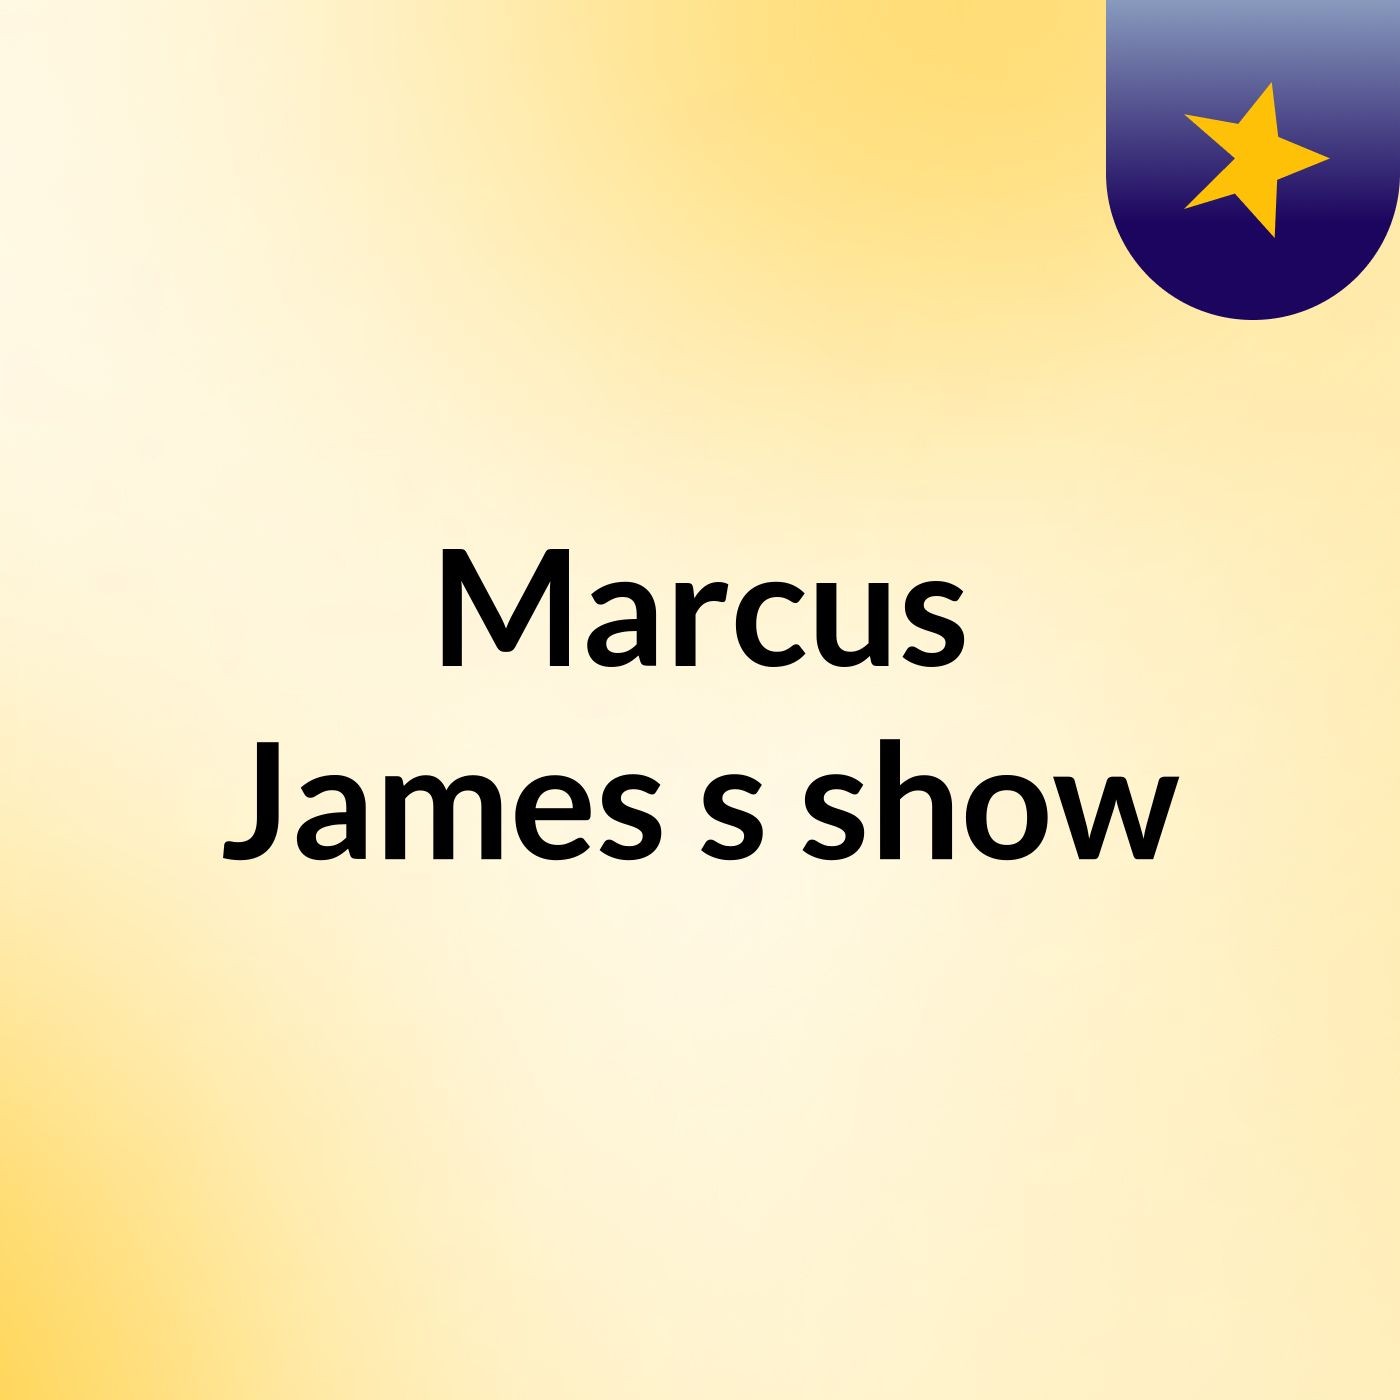 Episode 9 - Marcus James's show